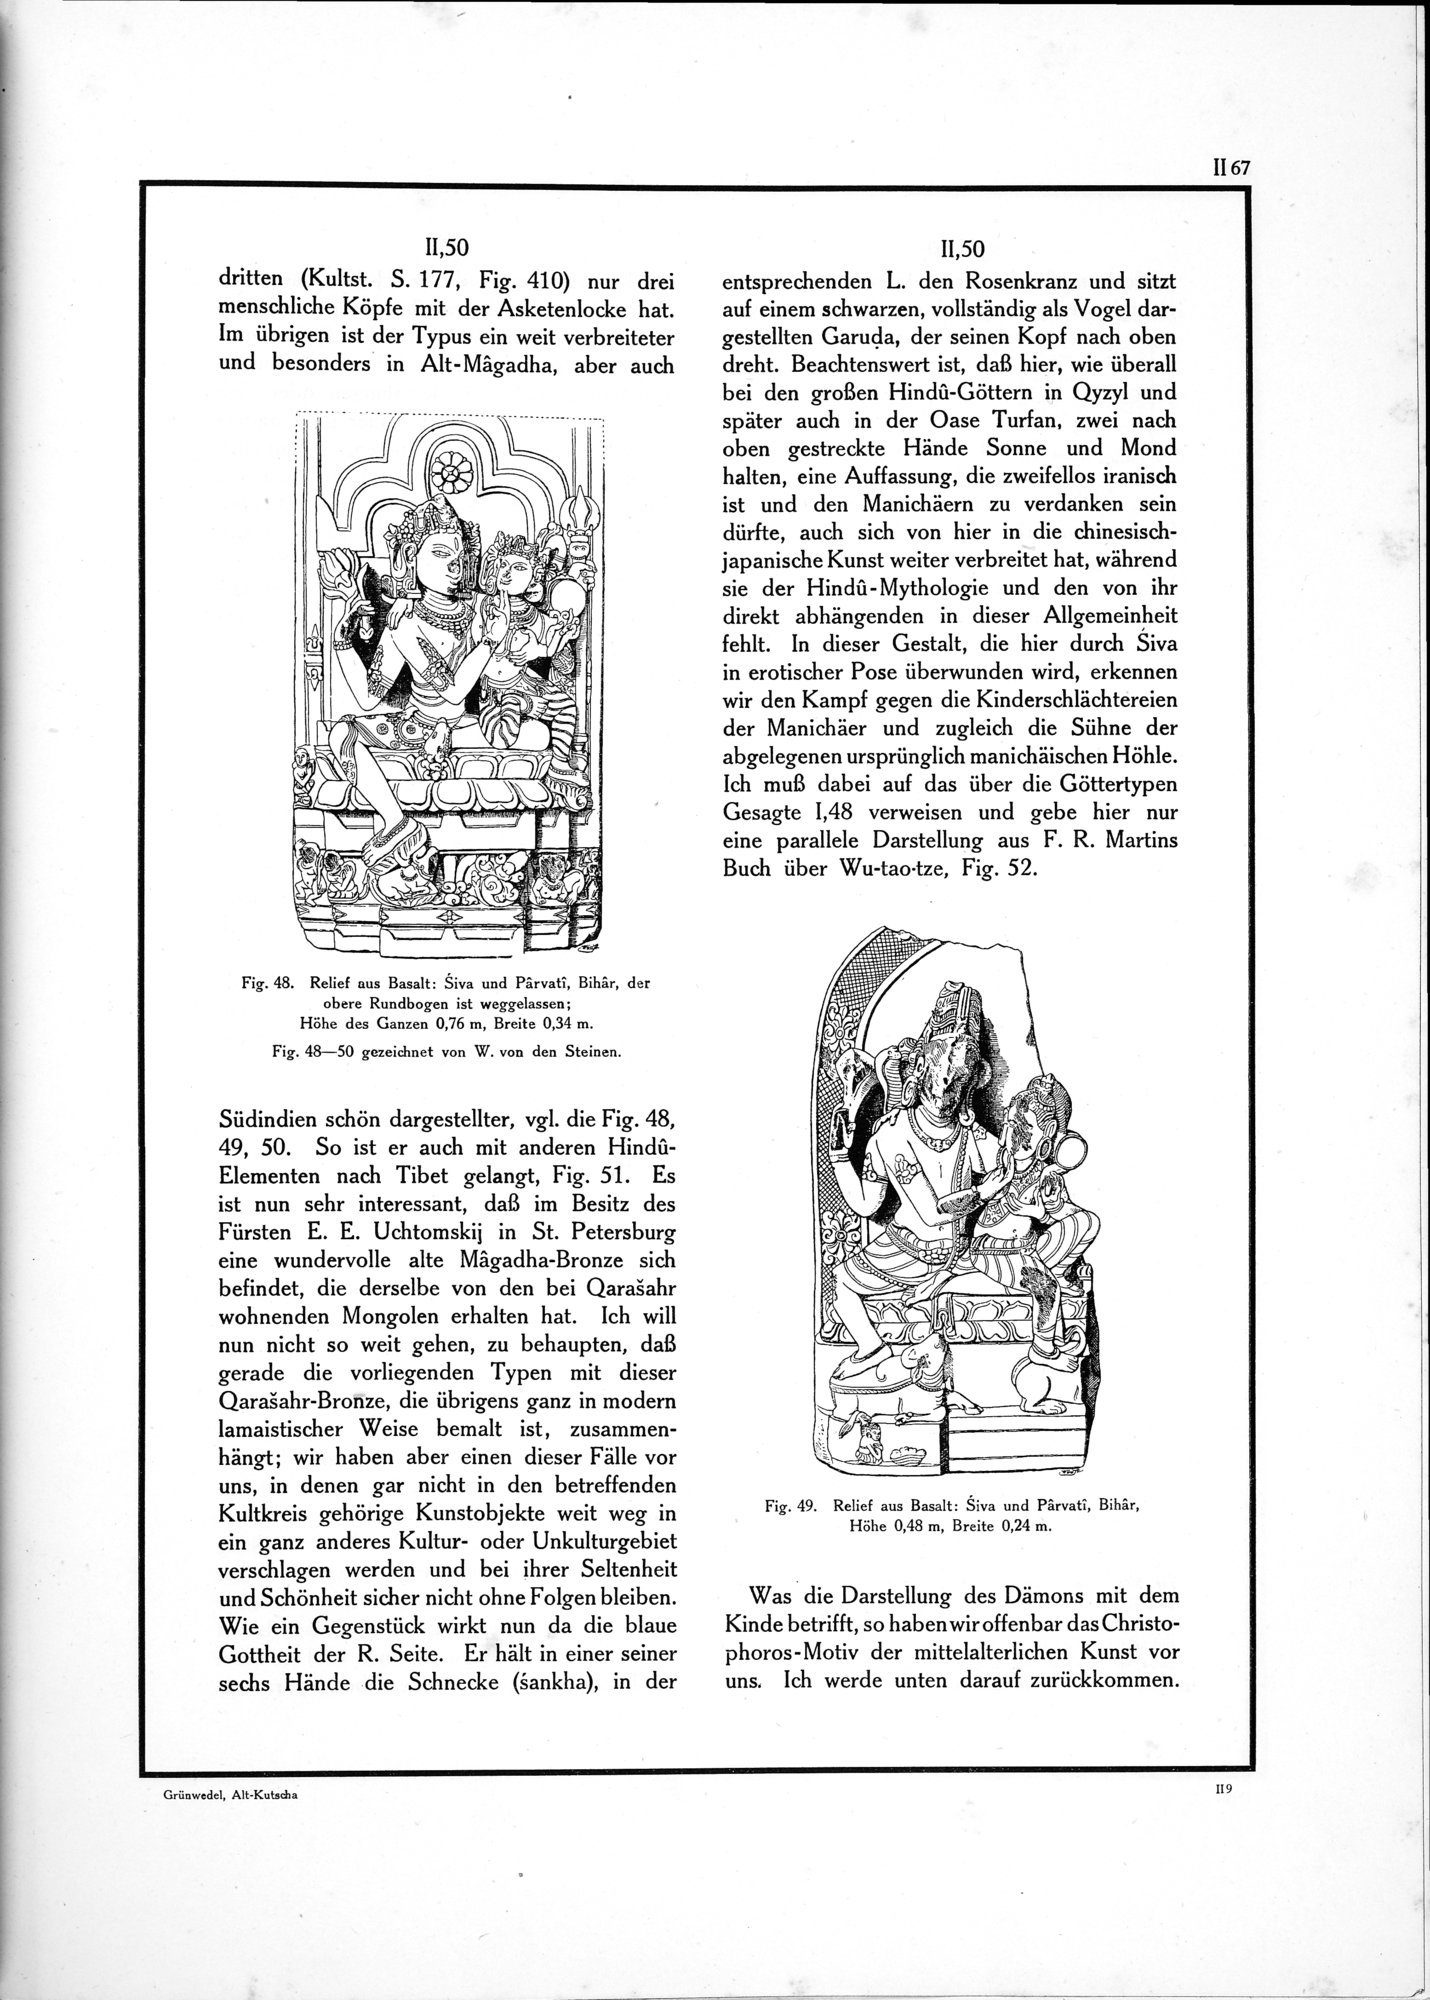 Alt-Kutscha : vol.1 / Page 177 (Grayscale High Resolution Image)